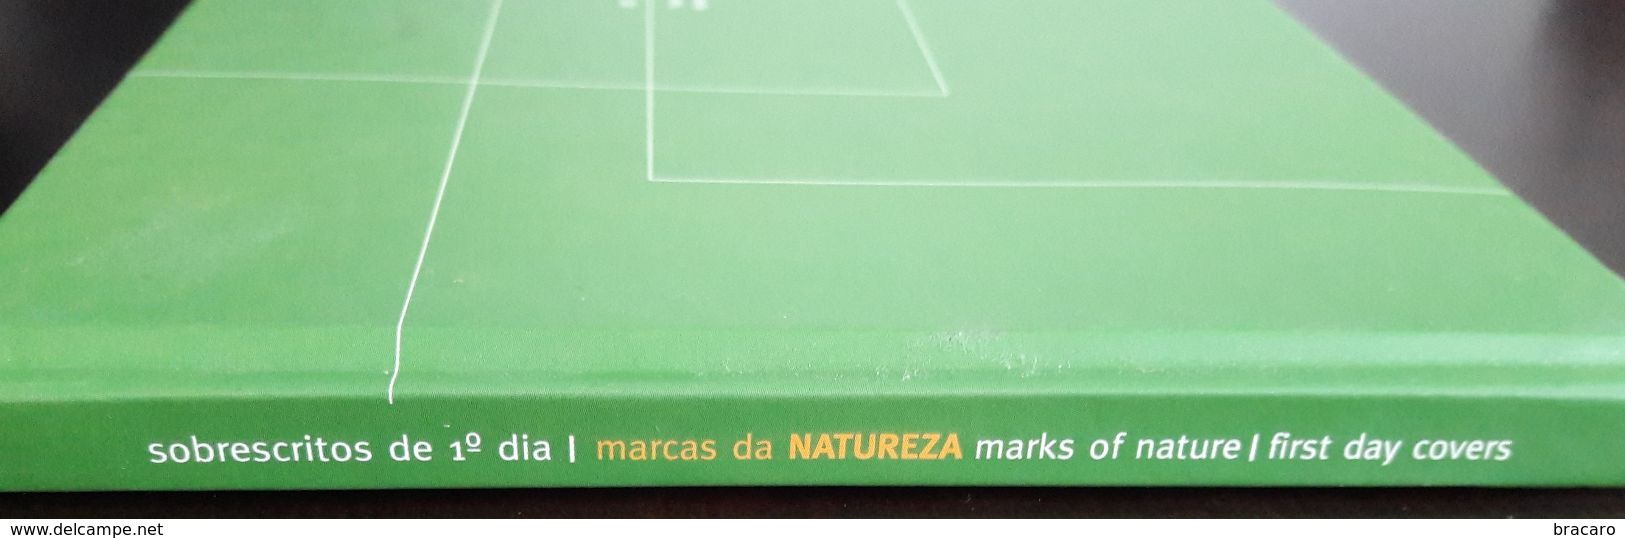 PORTUGAL - FDC - MARCAS DA NATUREZA / MARKS OF NATURE - BOOK WITH 5 FDC - 2009